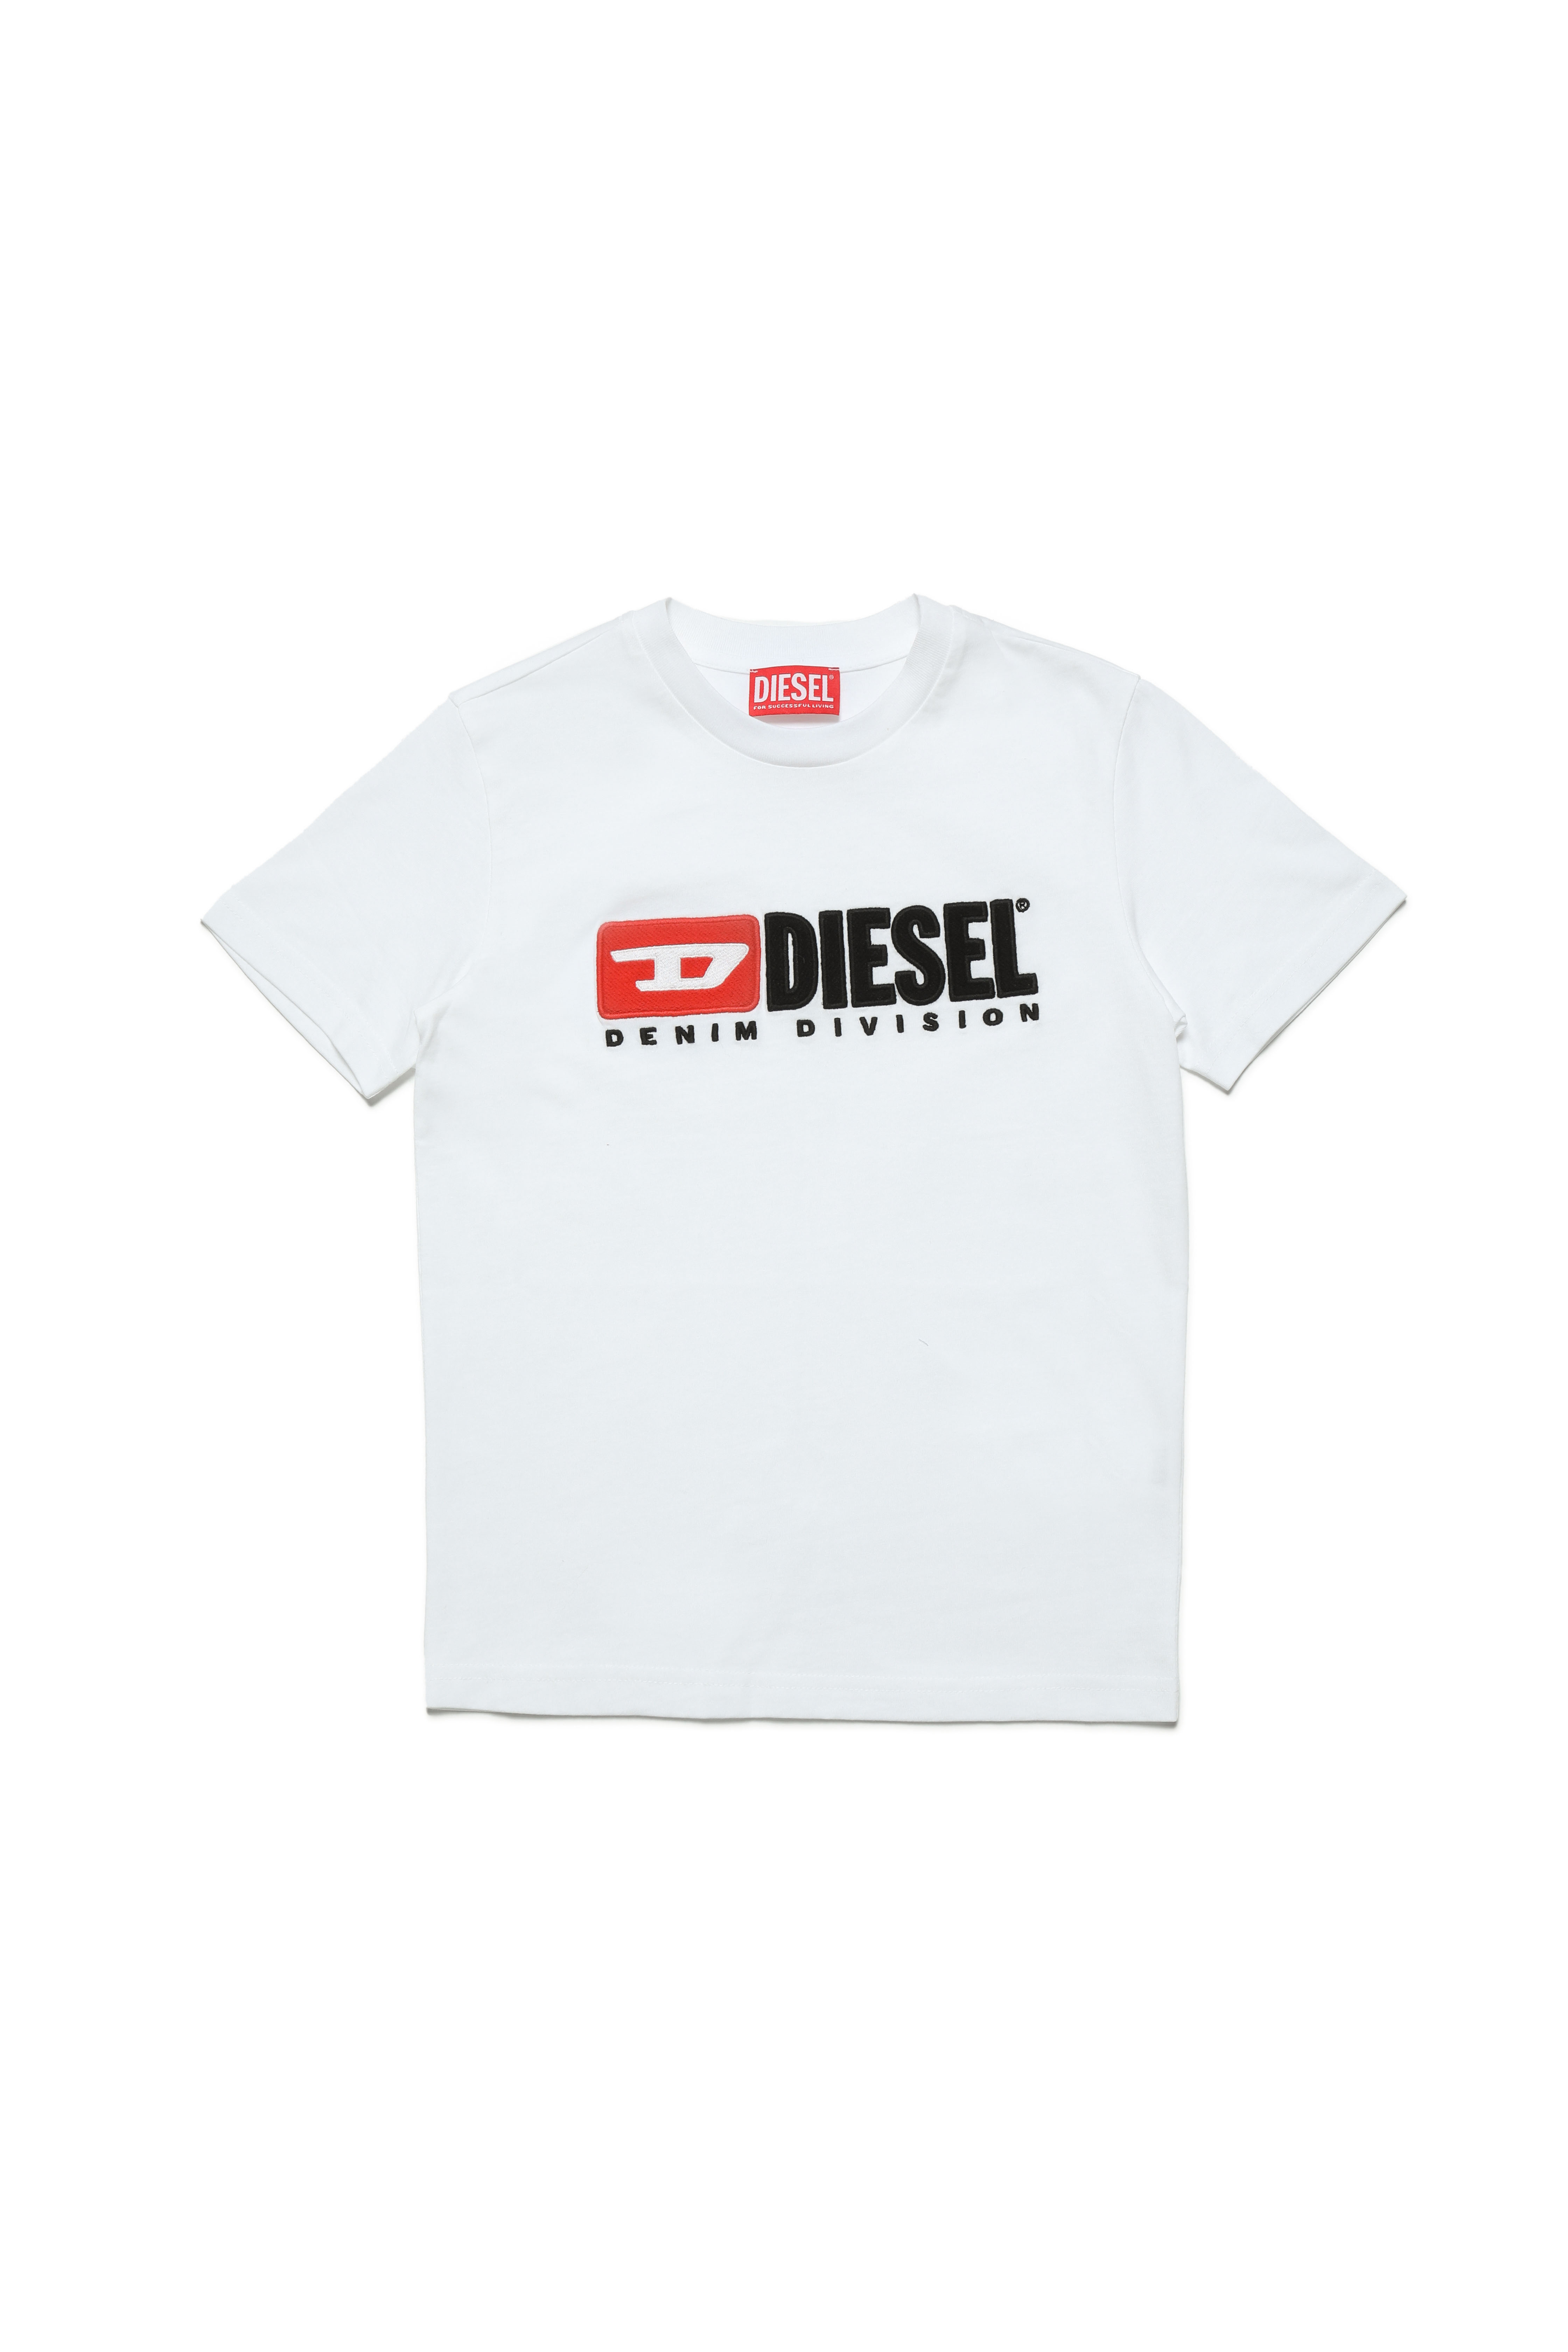 Diesel - TDIEGODIVE, White - Image 1